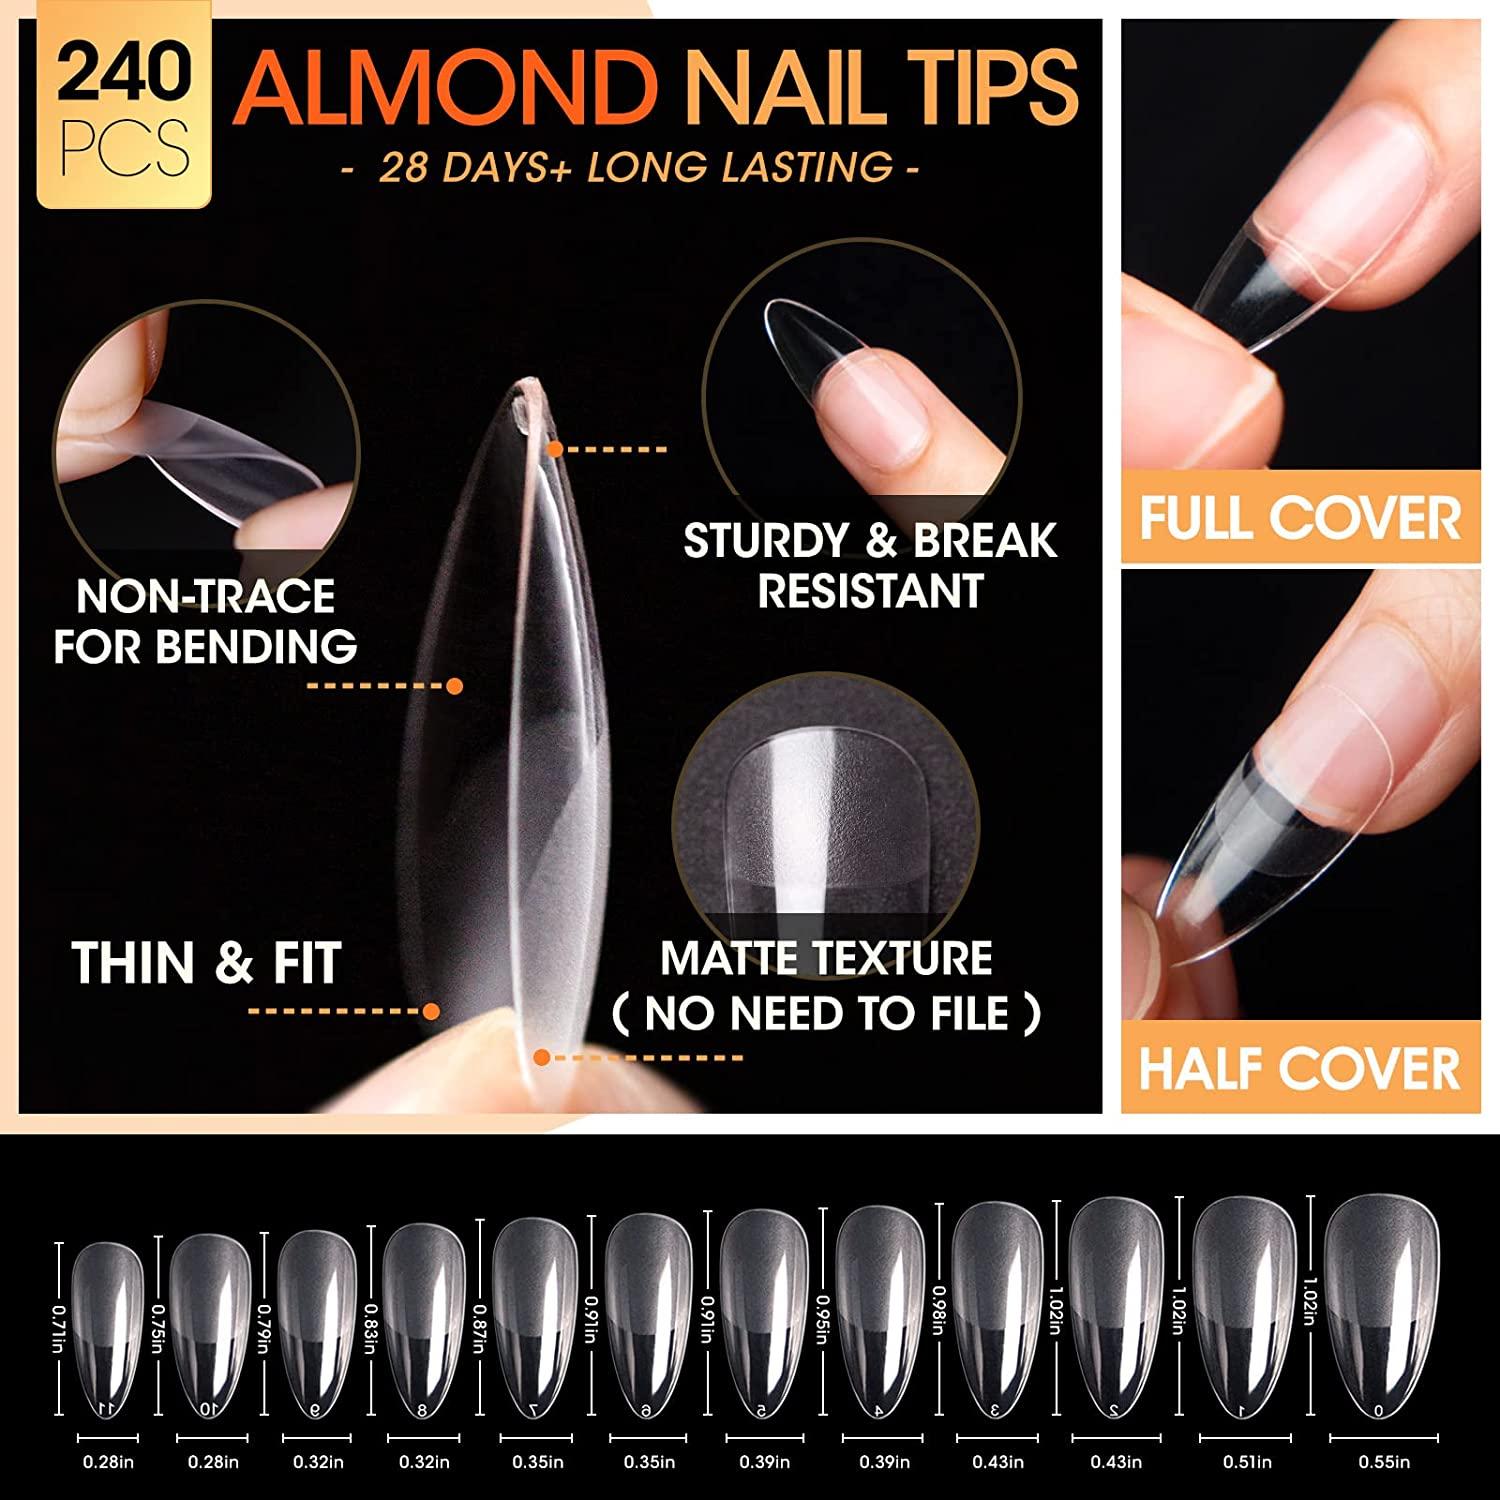 Gellen Nail Tips And Glue Gel Kit - Acrylic Nail Kit Short Almond Fake  Nails 504Pcs Clear False Nail Tips, 3 IN 1 Nail Glue Gel, LED Nail Lamp  Acrylic